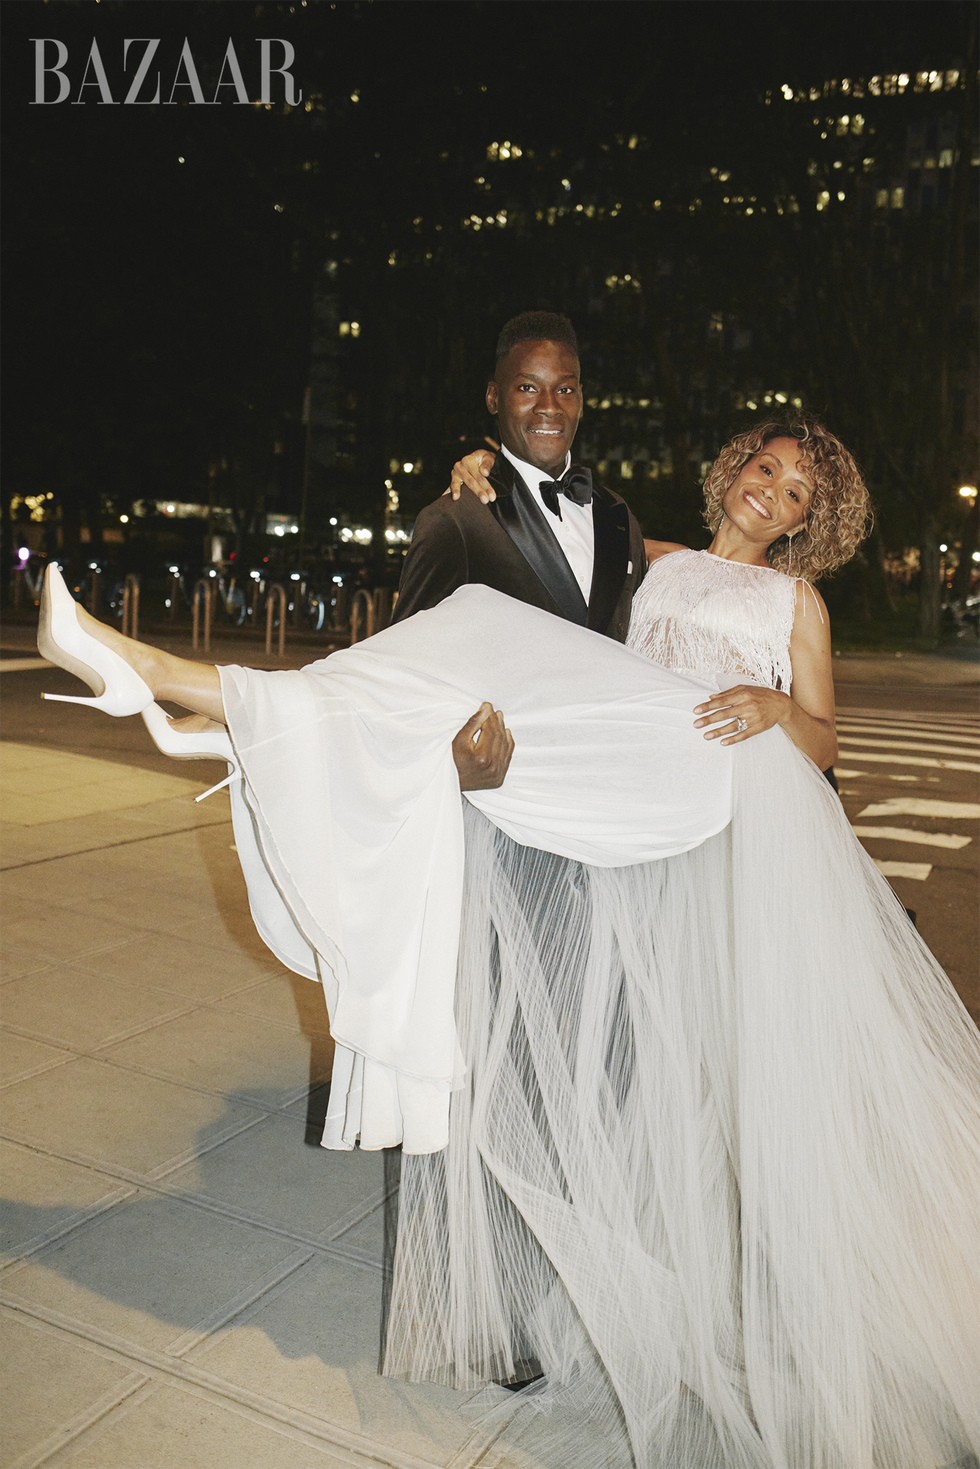 Bazaar's Favorite 2023 Wedding Looks, Photographed at New York